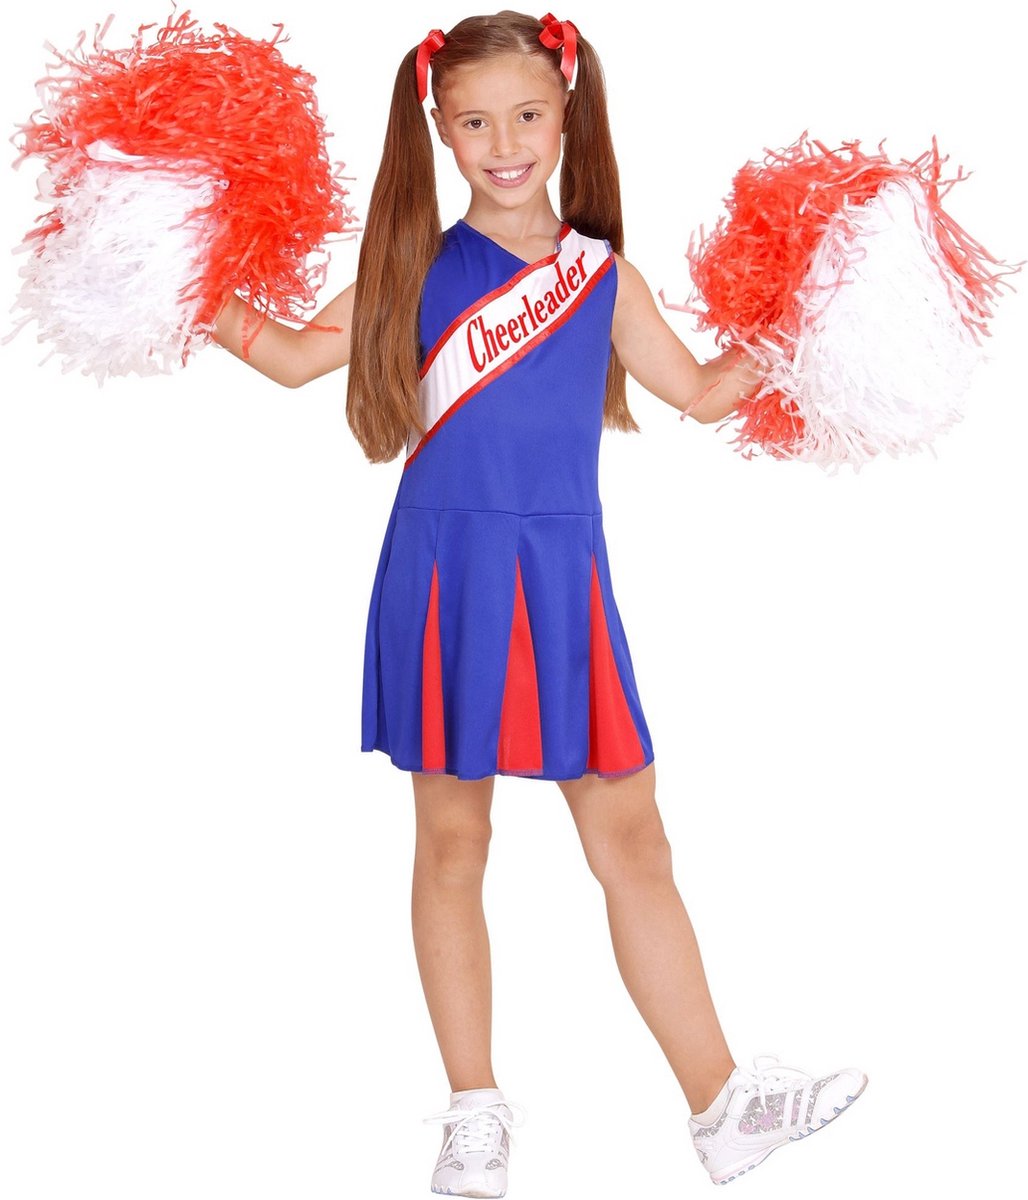 Widmann - Cheerleader Kostuum - Amerikaanse Cheerleader Blauw / Rood - Meisje - Blauw, Rood - Maat 128 - Carnavalskleding - Verkleedkleding